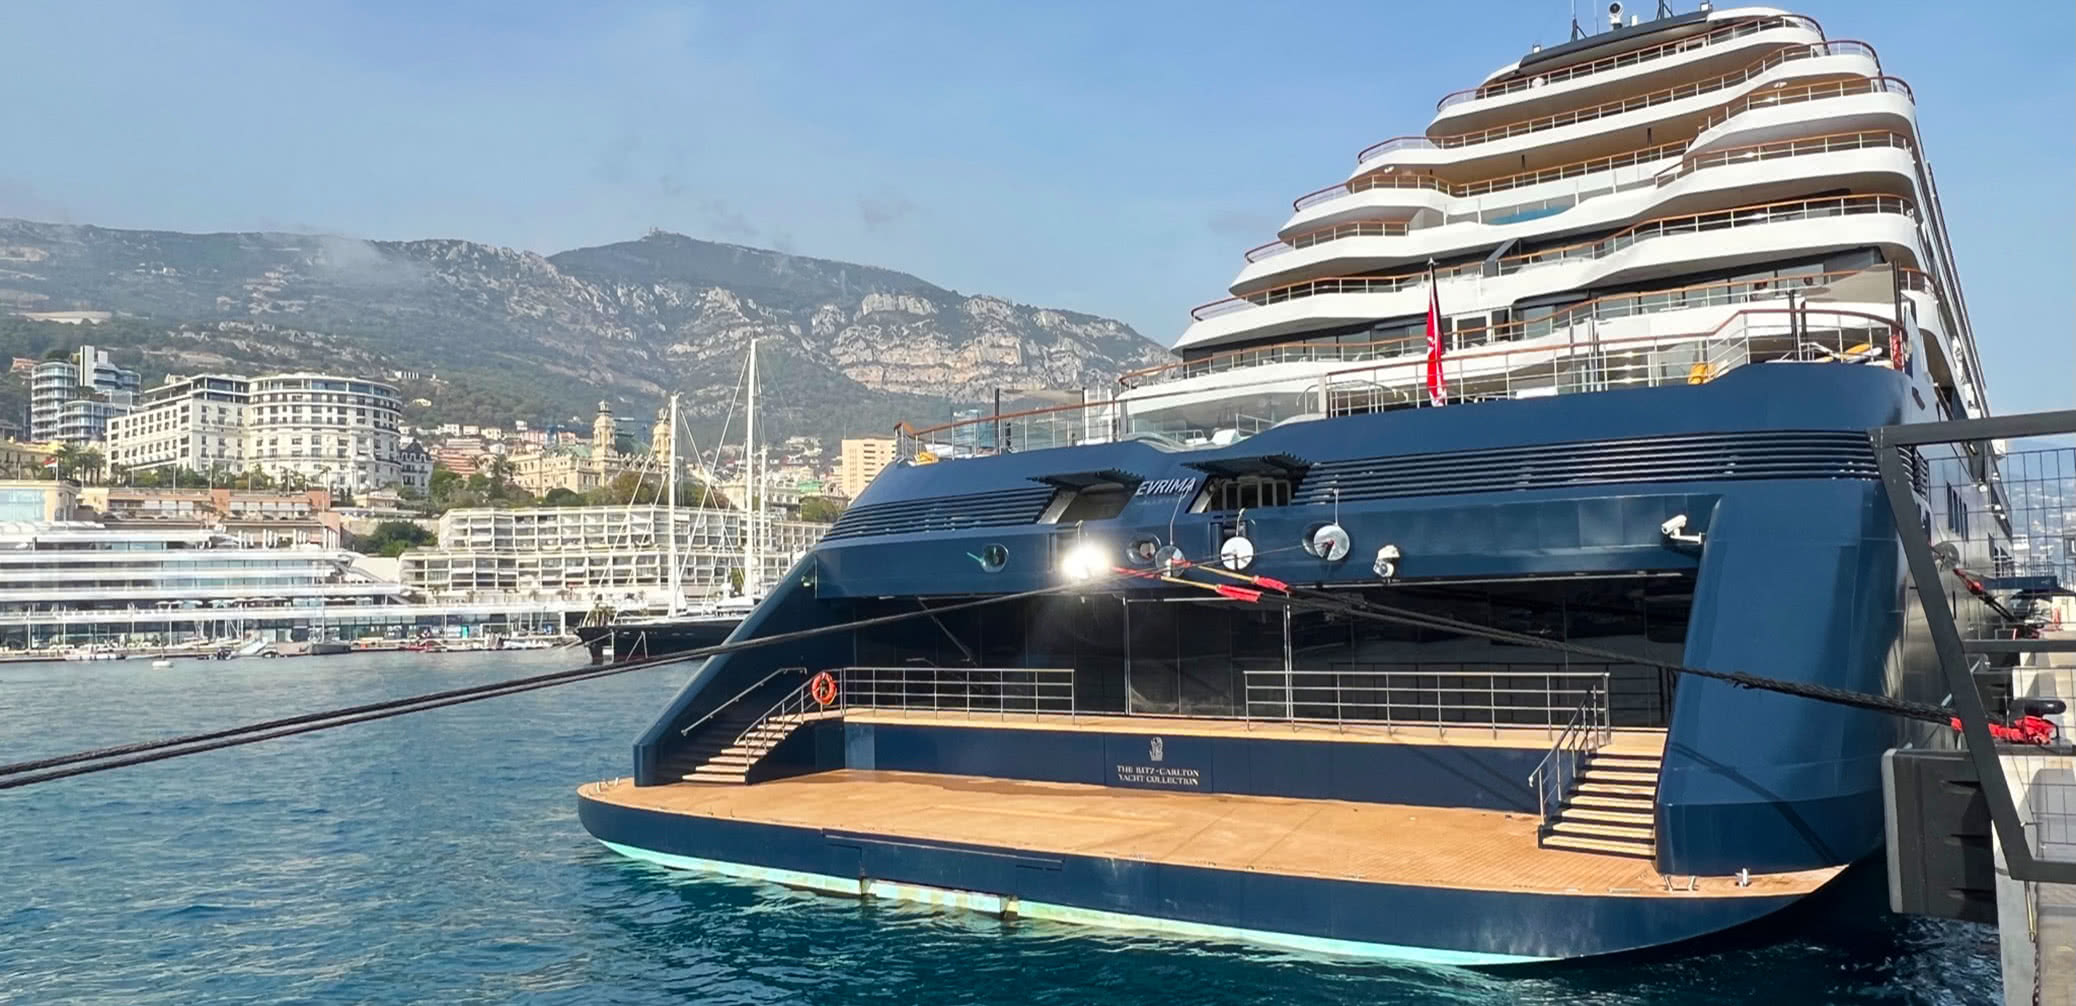 Review: Ritz-Carlton Yacht Evrima